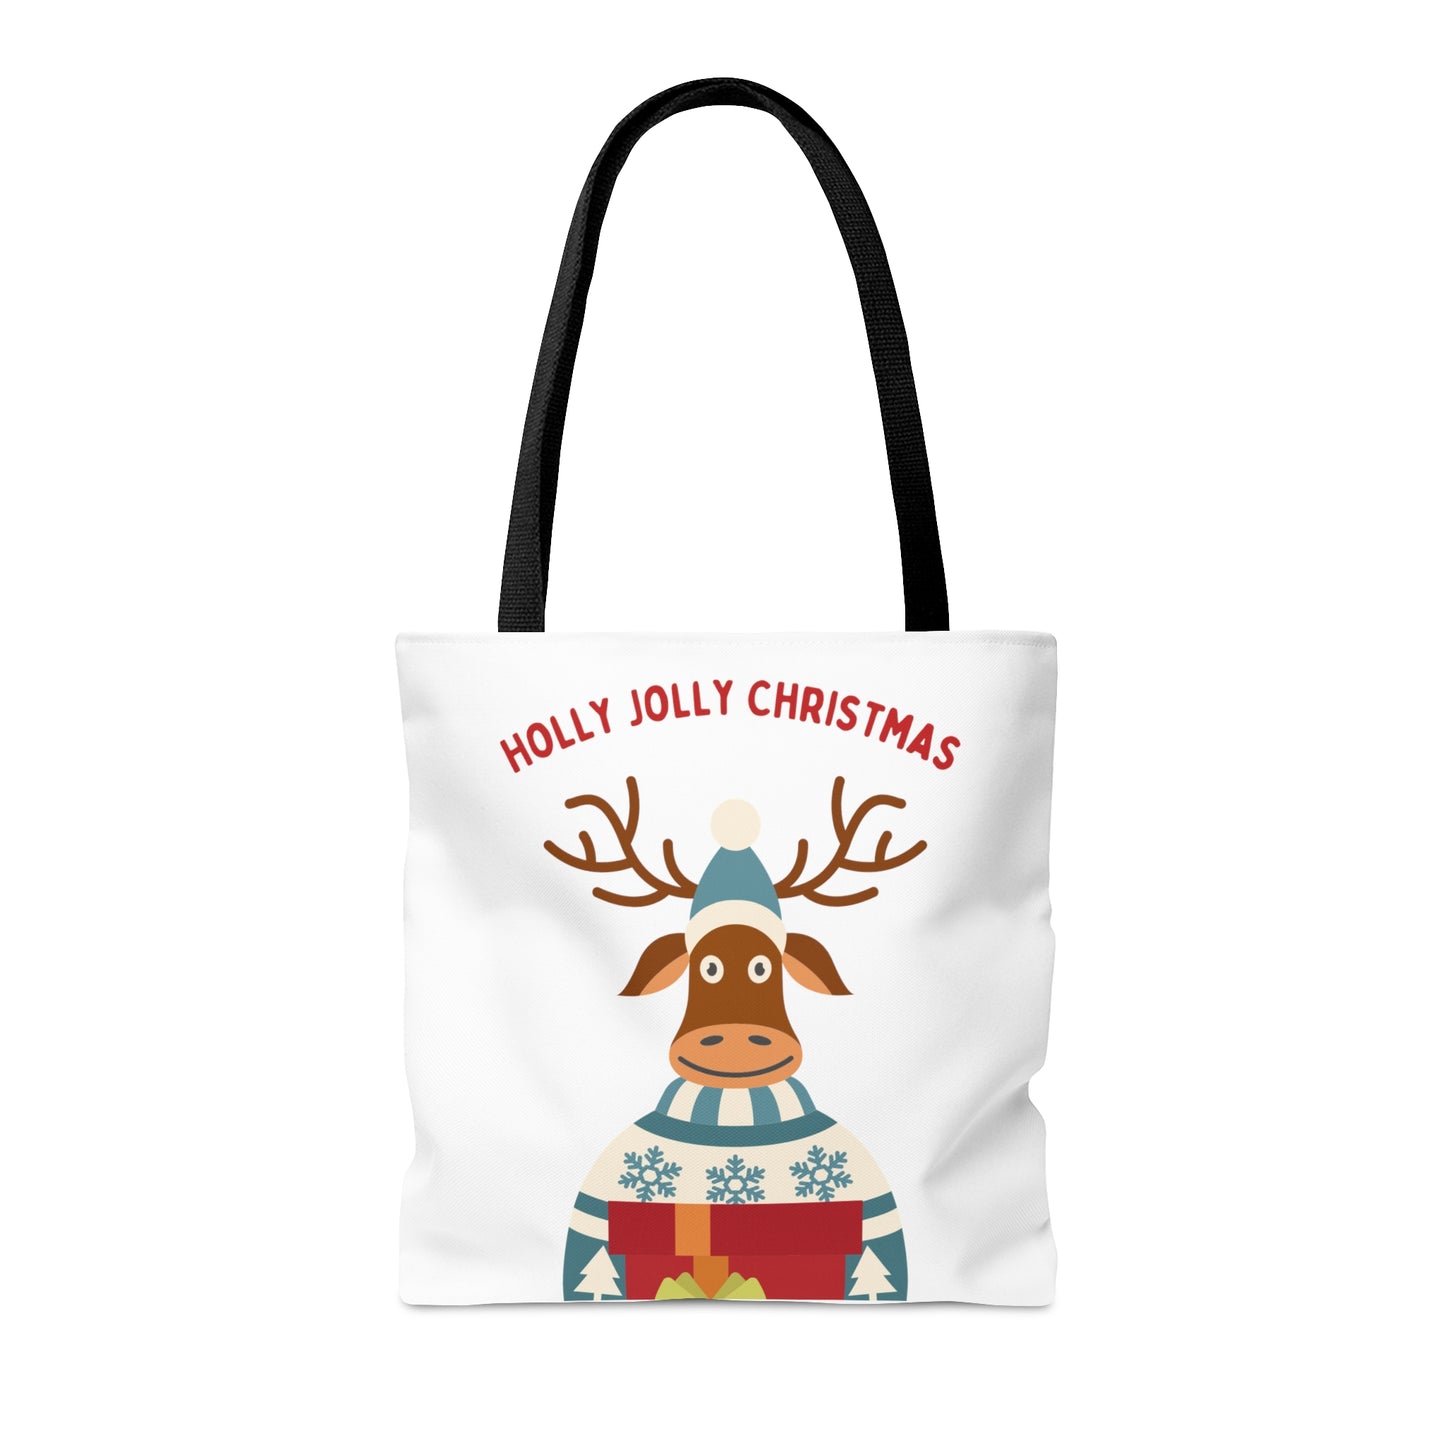 Holly Jolly Christmas Tote Bag